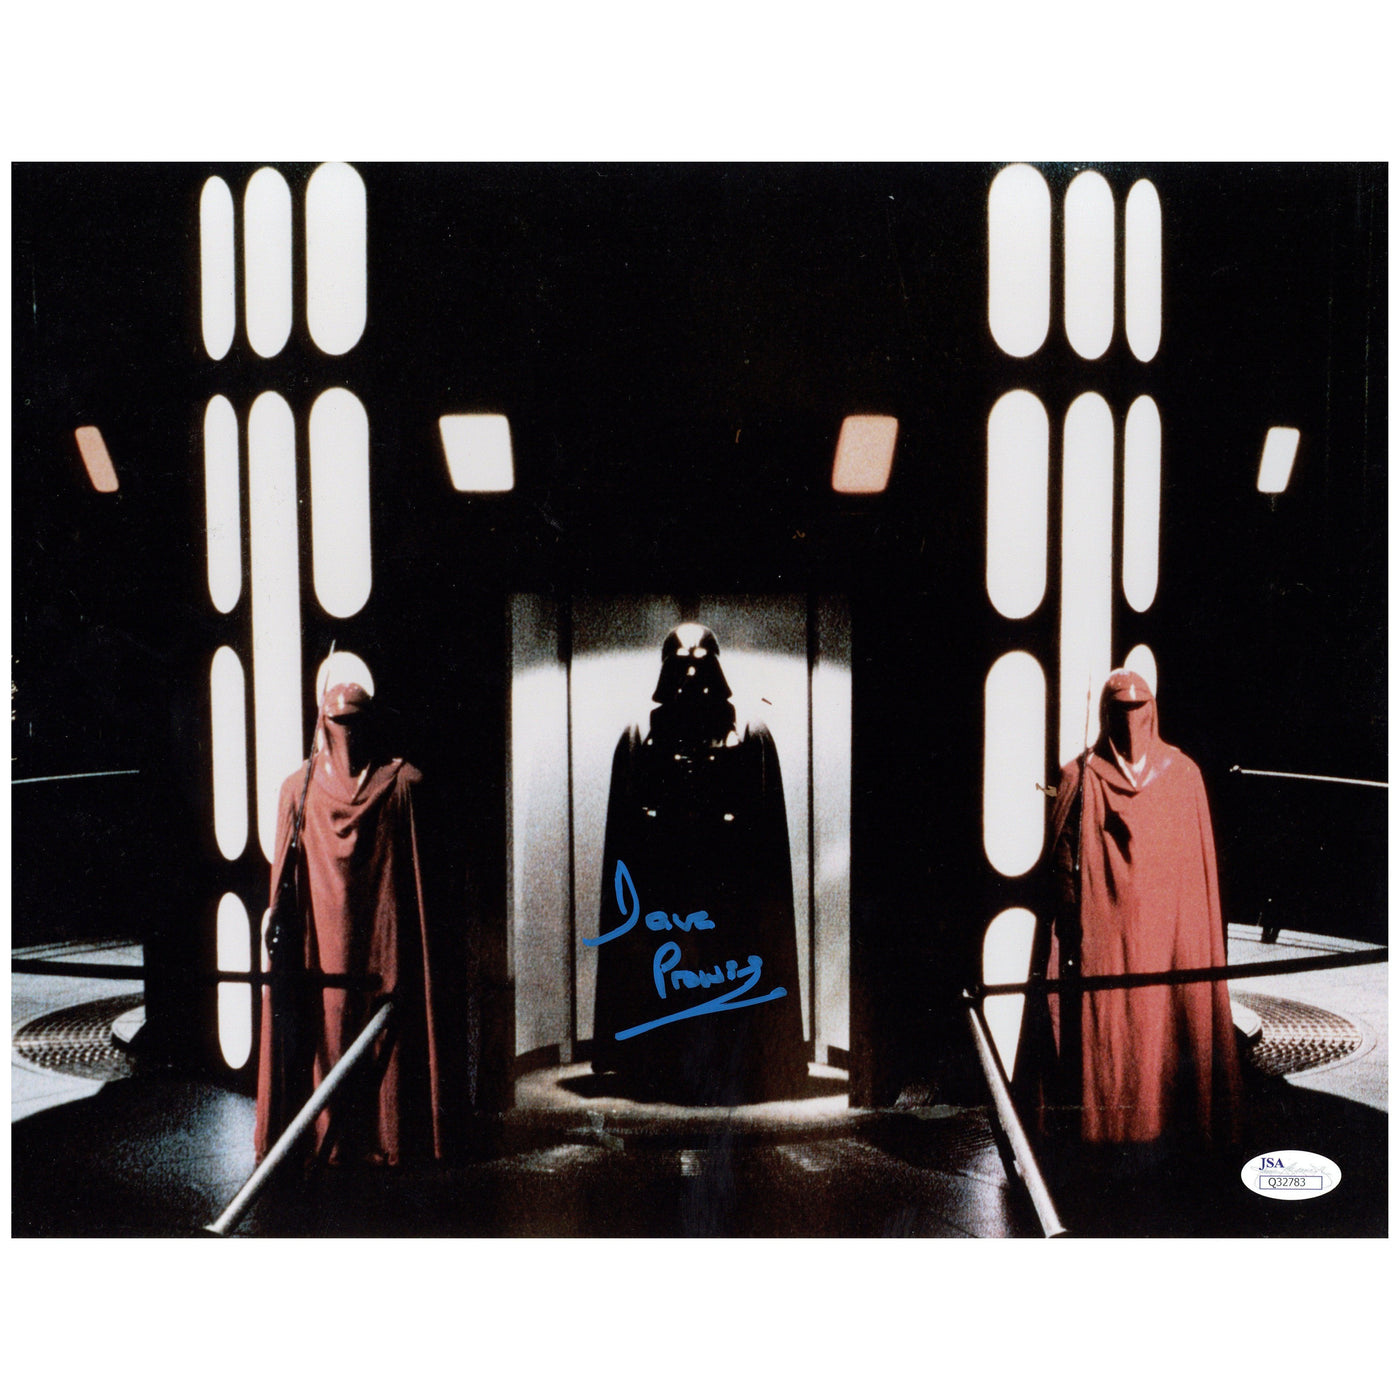 Dave Prowse Signed 11x14 Photo Star Wars Darth Vader Autographed JSA COA 3